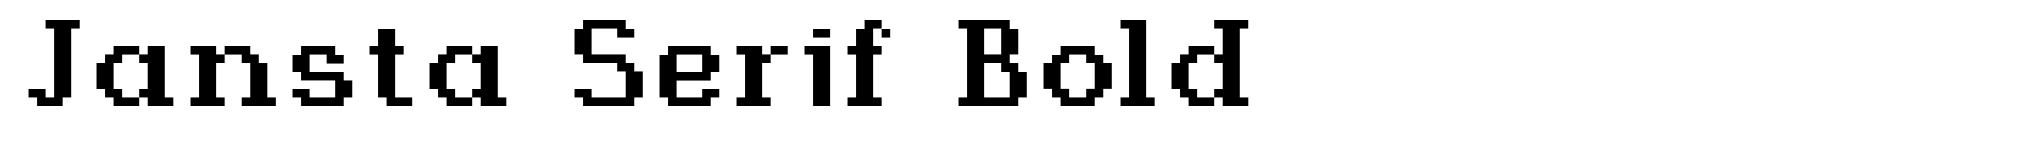 Jansta Serif Bold image